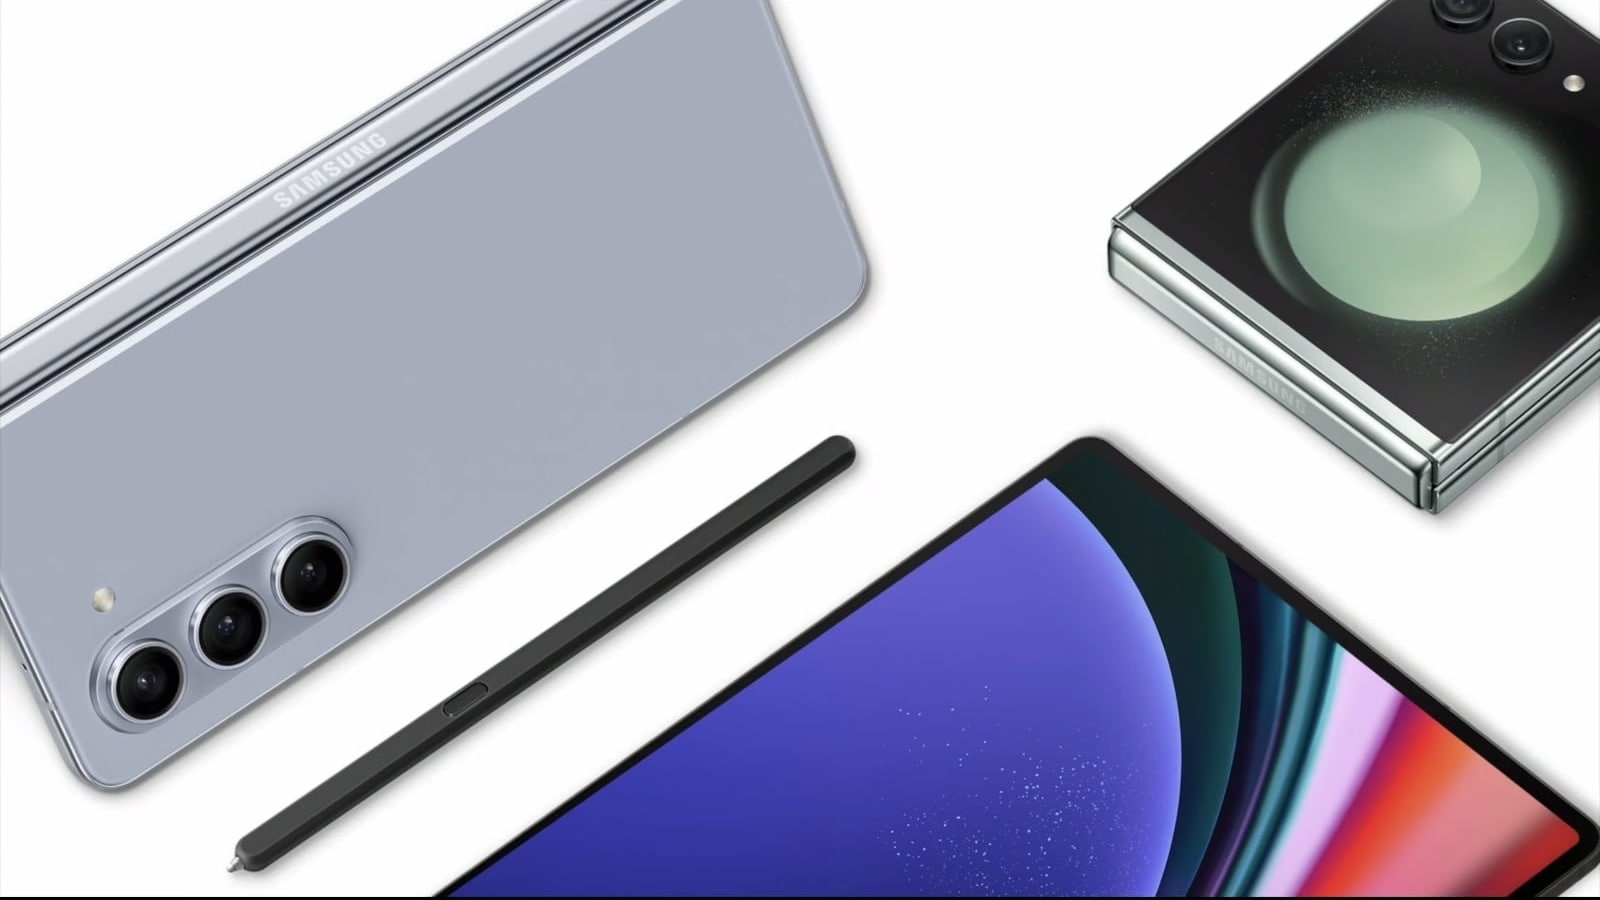 Samsung Galaxy Z Fold 6, Galaxy Z Flip 6 obtain 3C certification, confirming charging specs